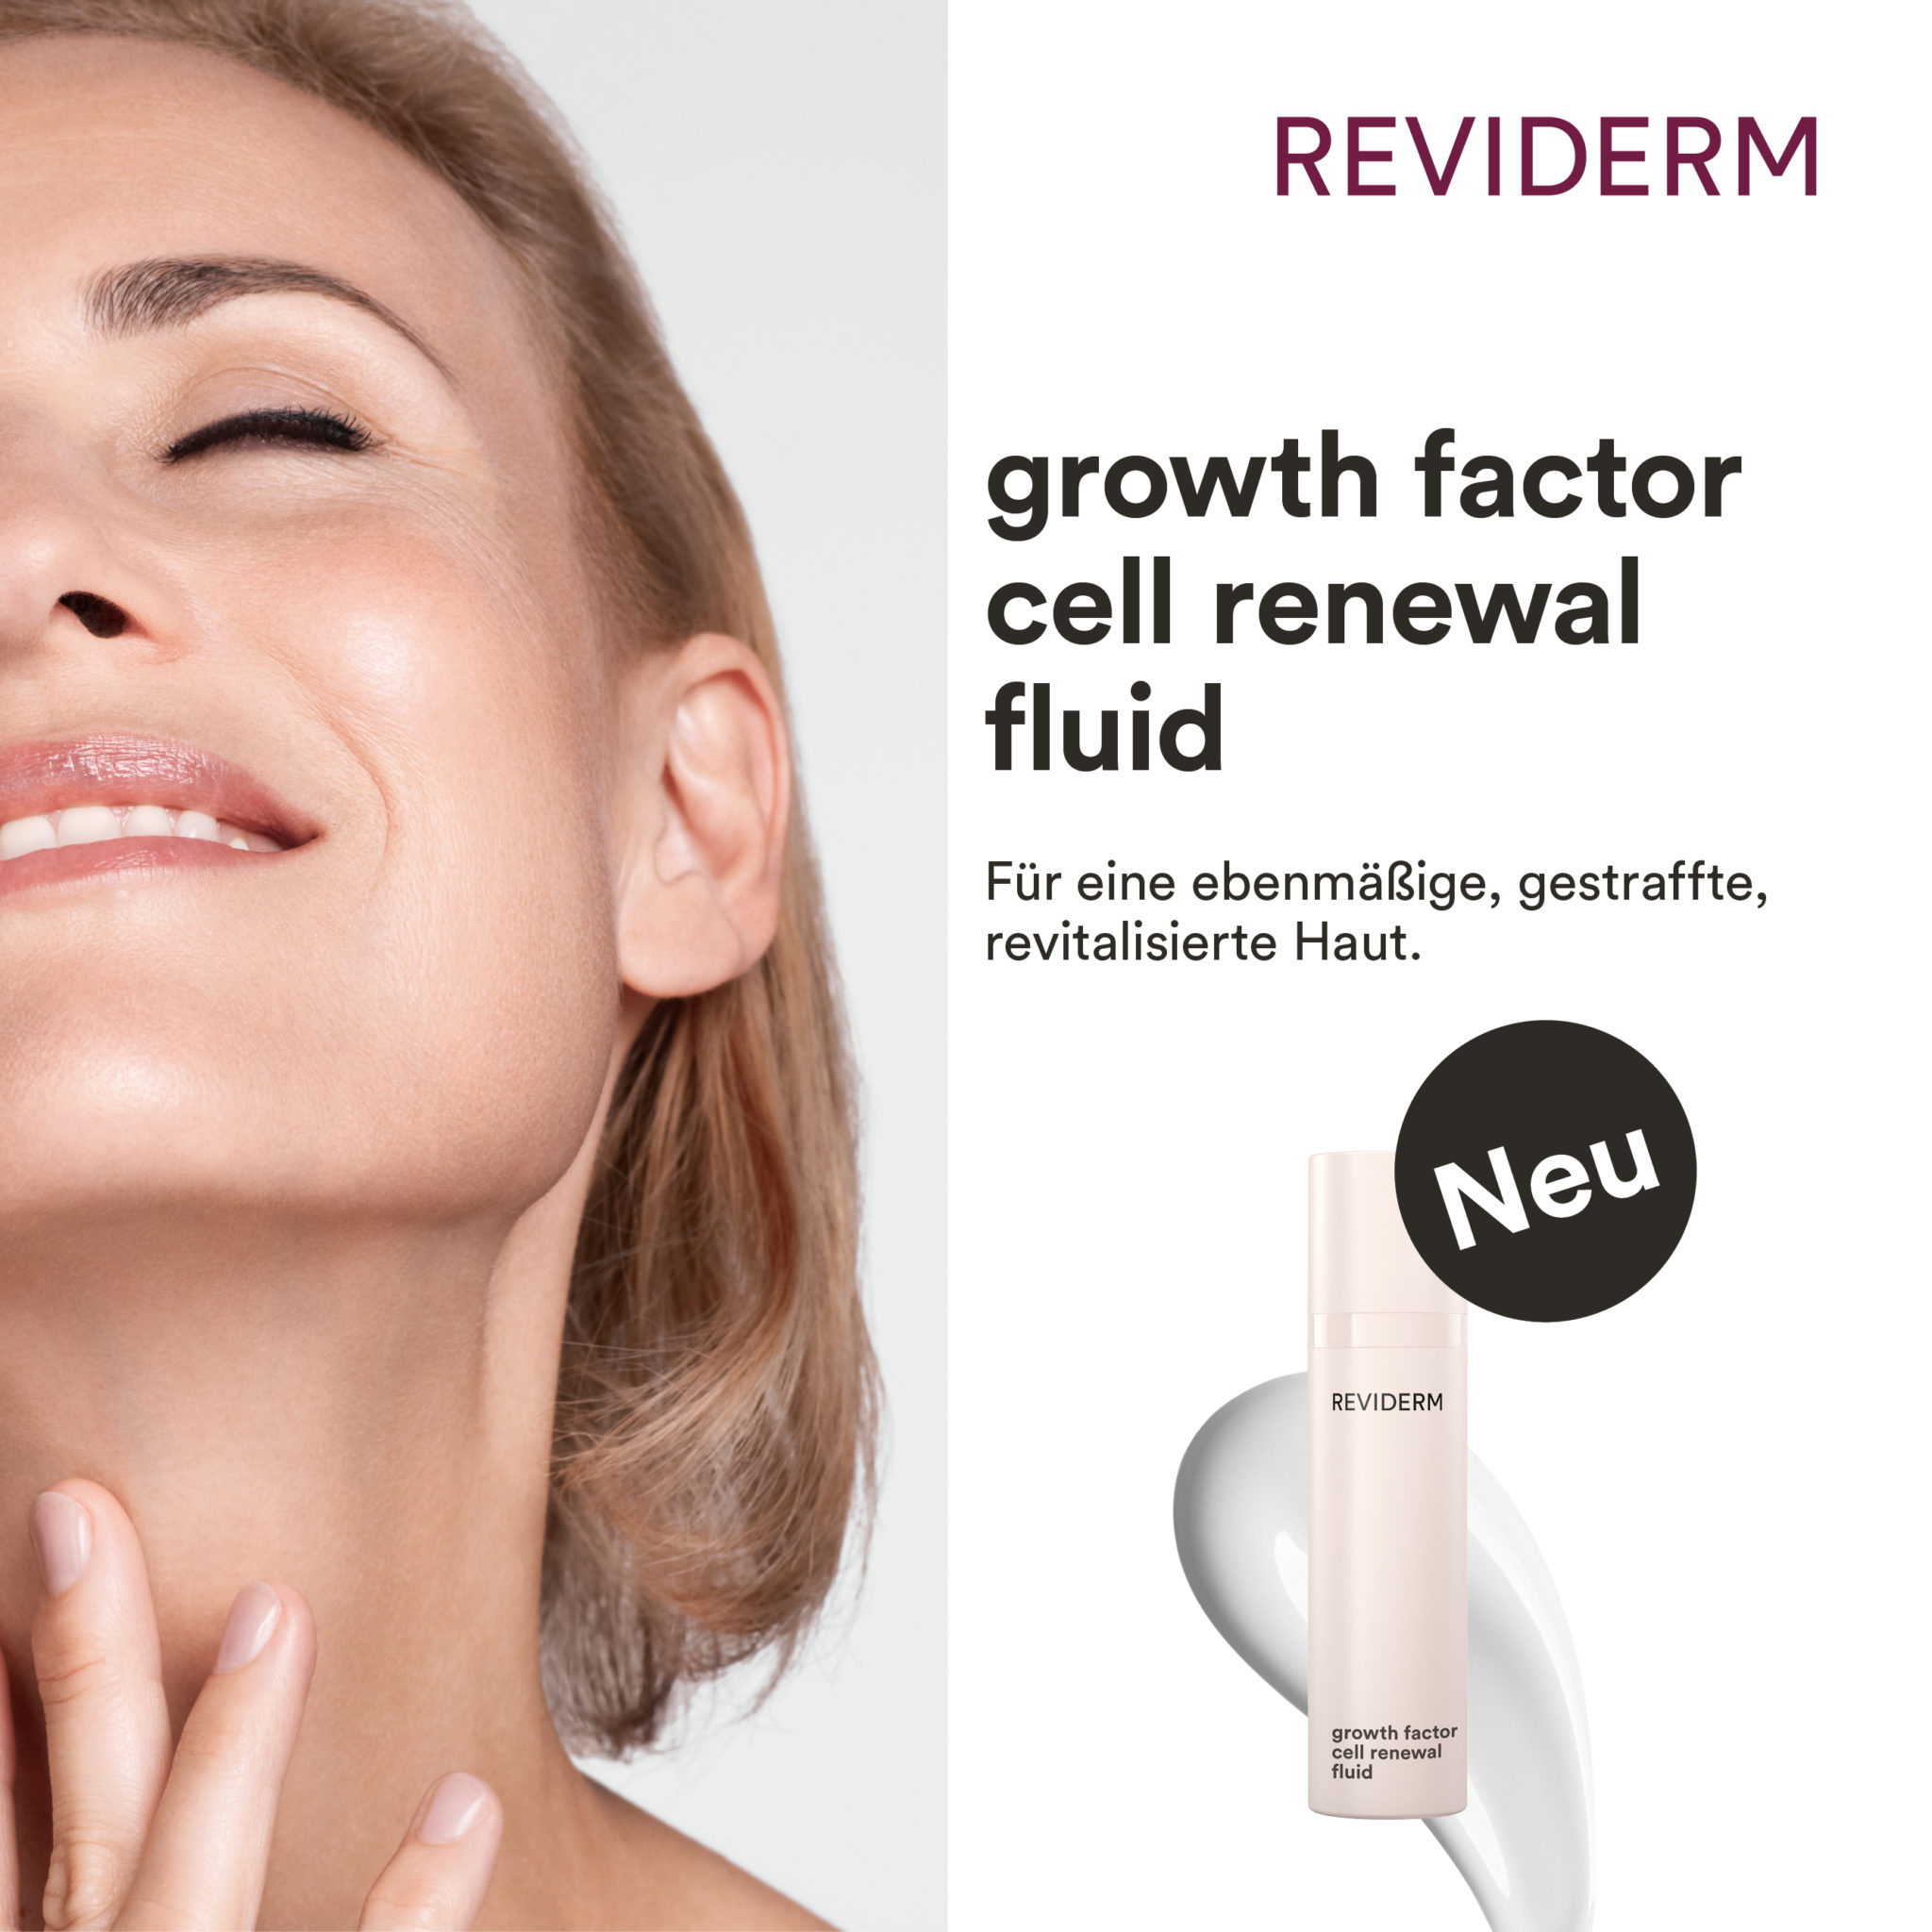 REVIDERM growth factor cell renewal fluid | gestraffte und revitalisierte Haut